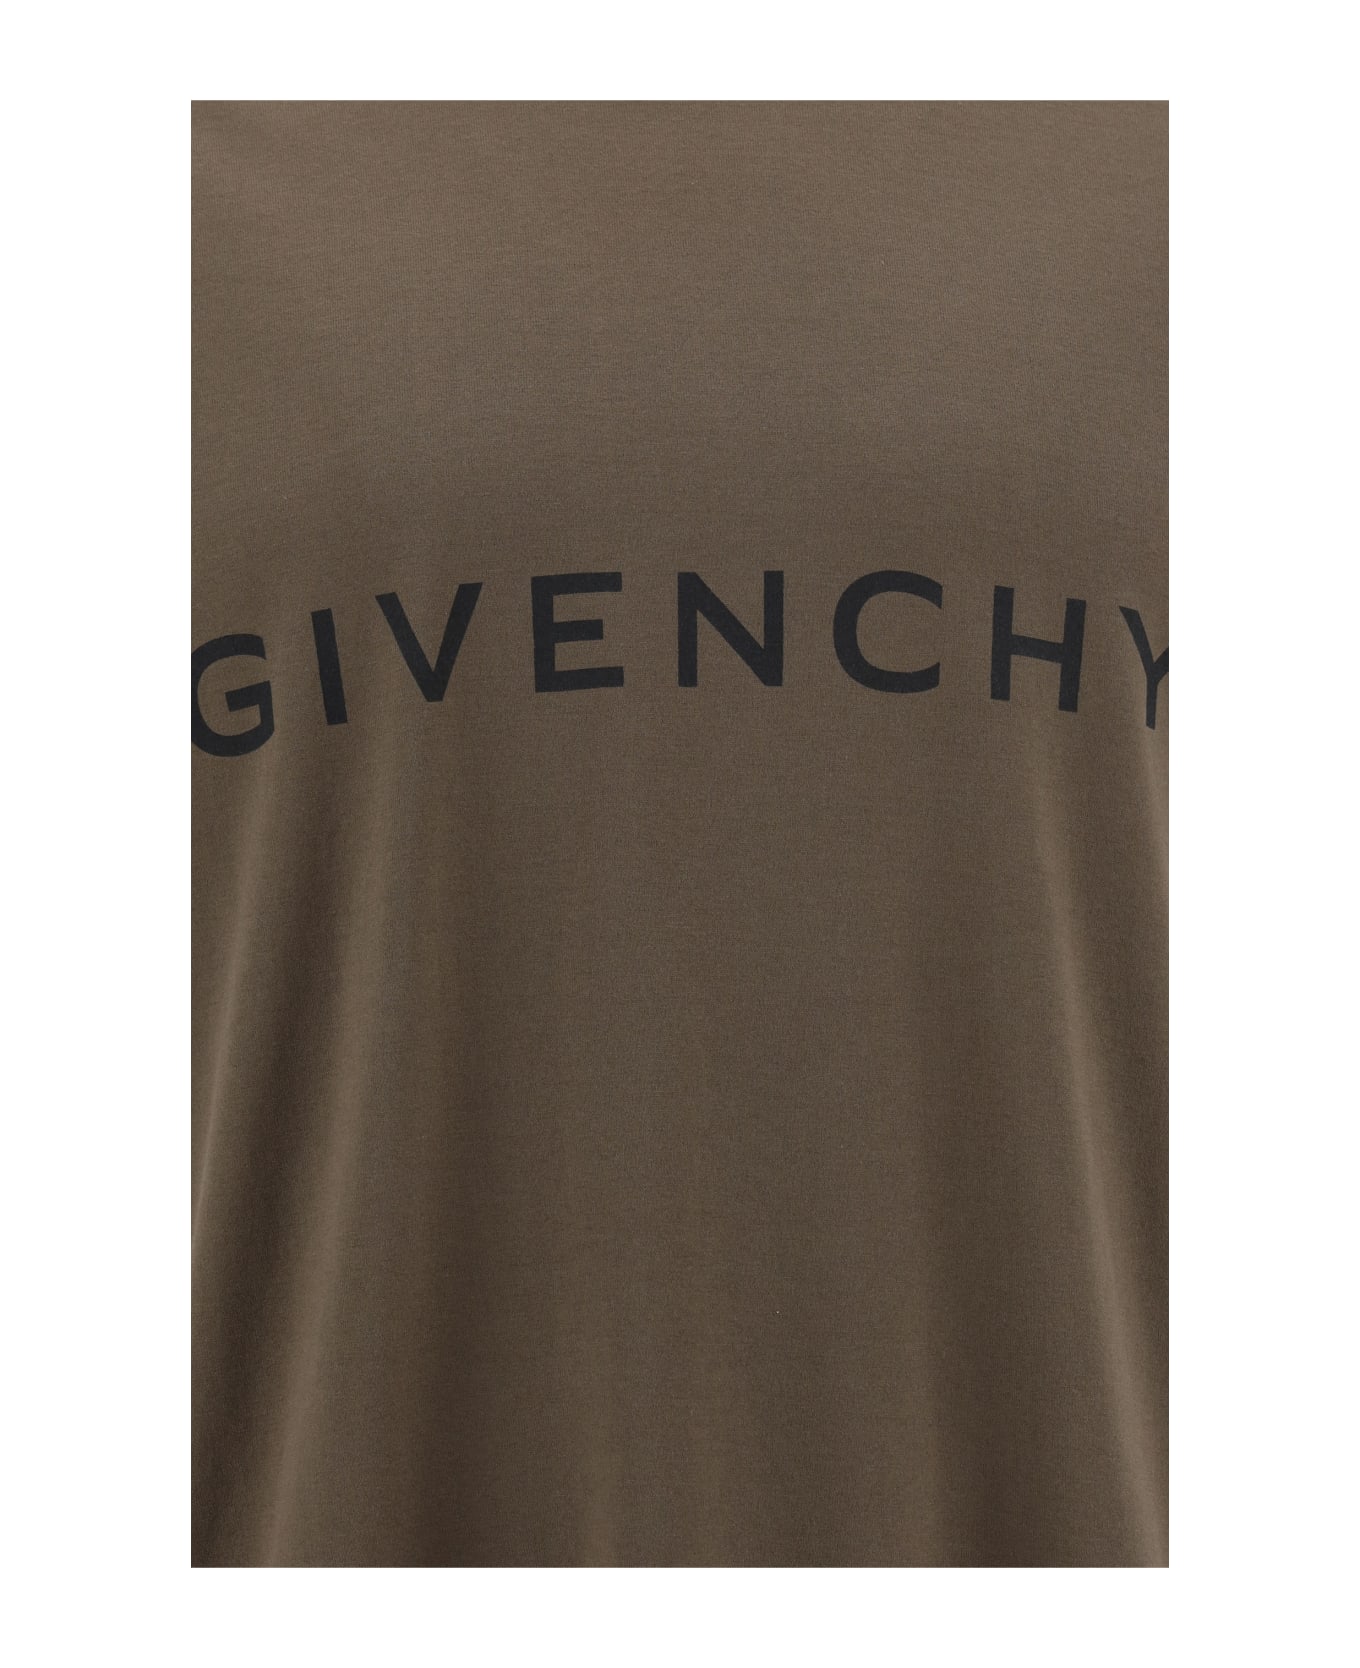 Givenchy T-shirt - Khaki